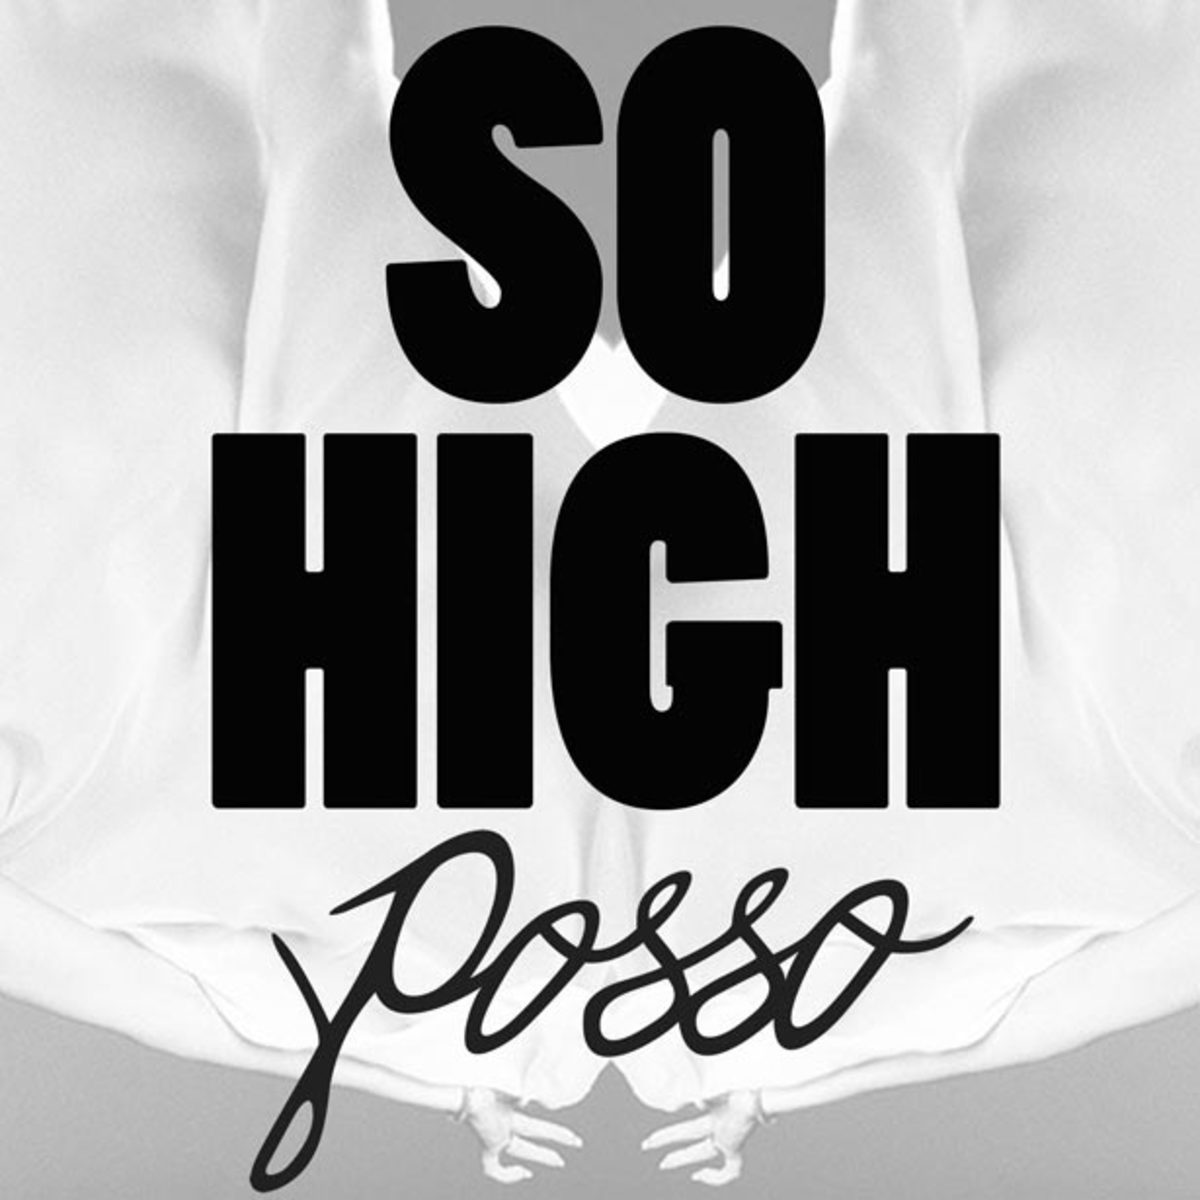 Listen: Posso "So High" via Boiler House Records